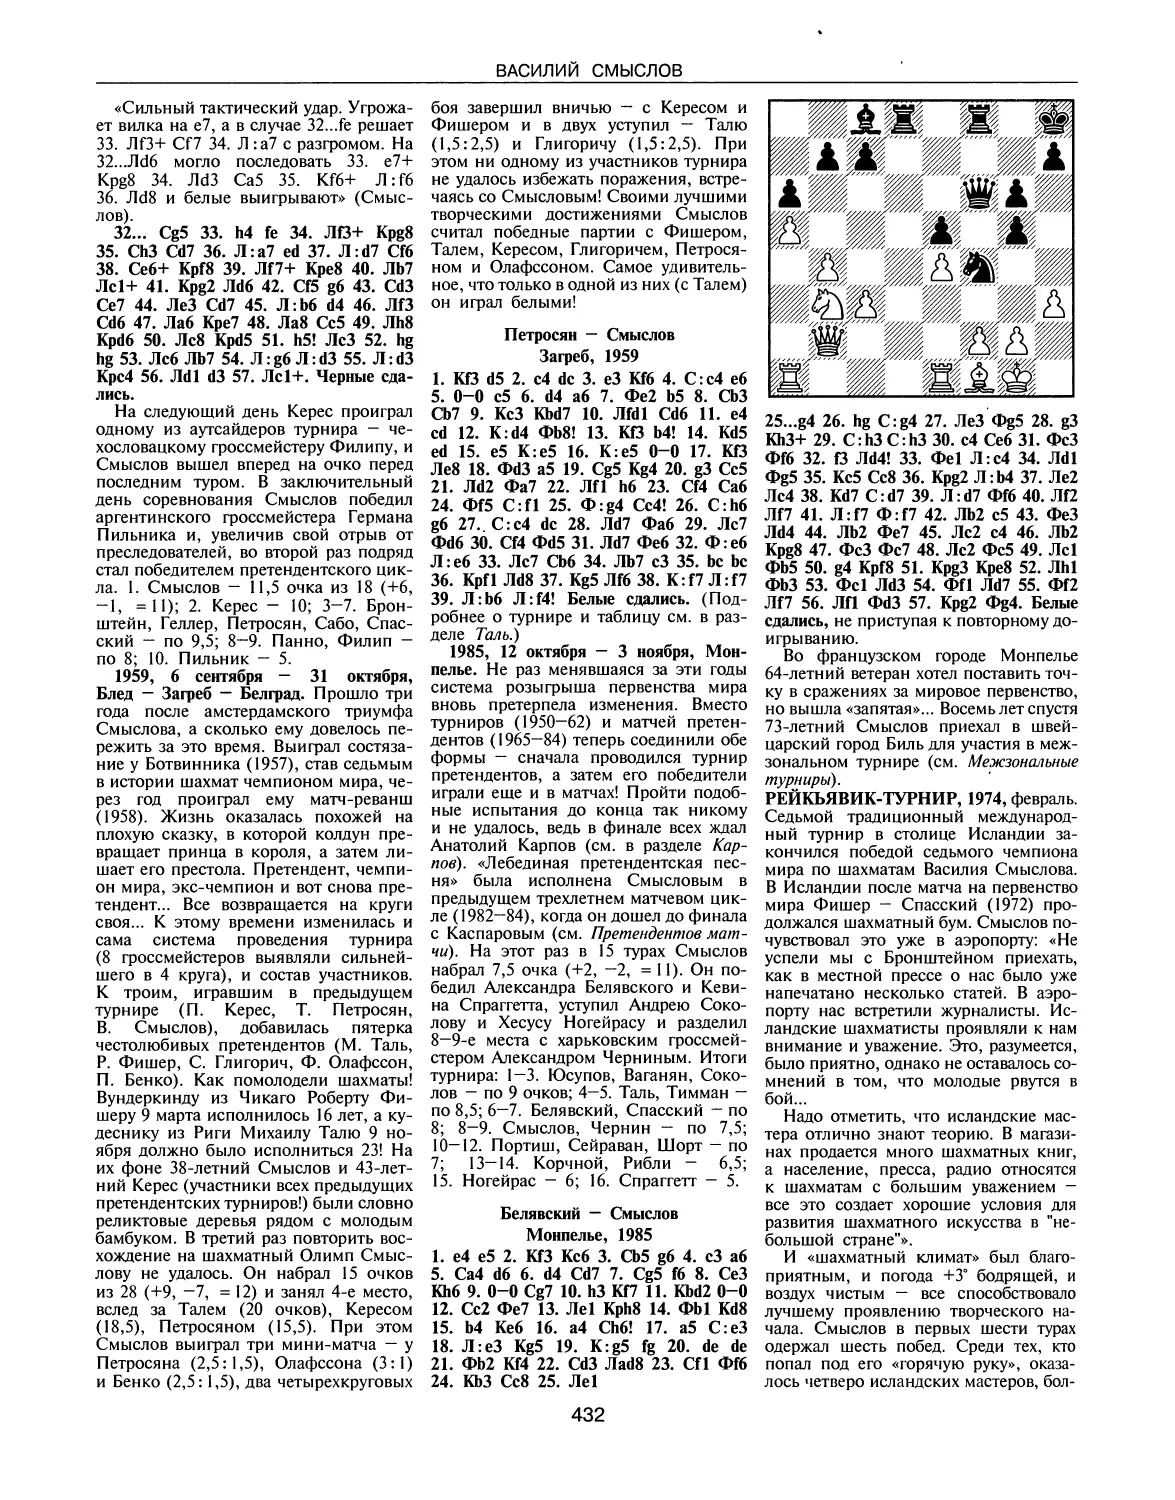 Рейкьявик-турнир, 1974